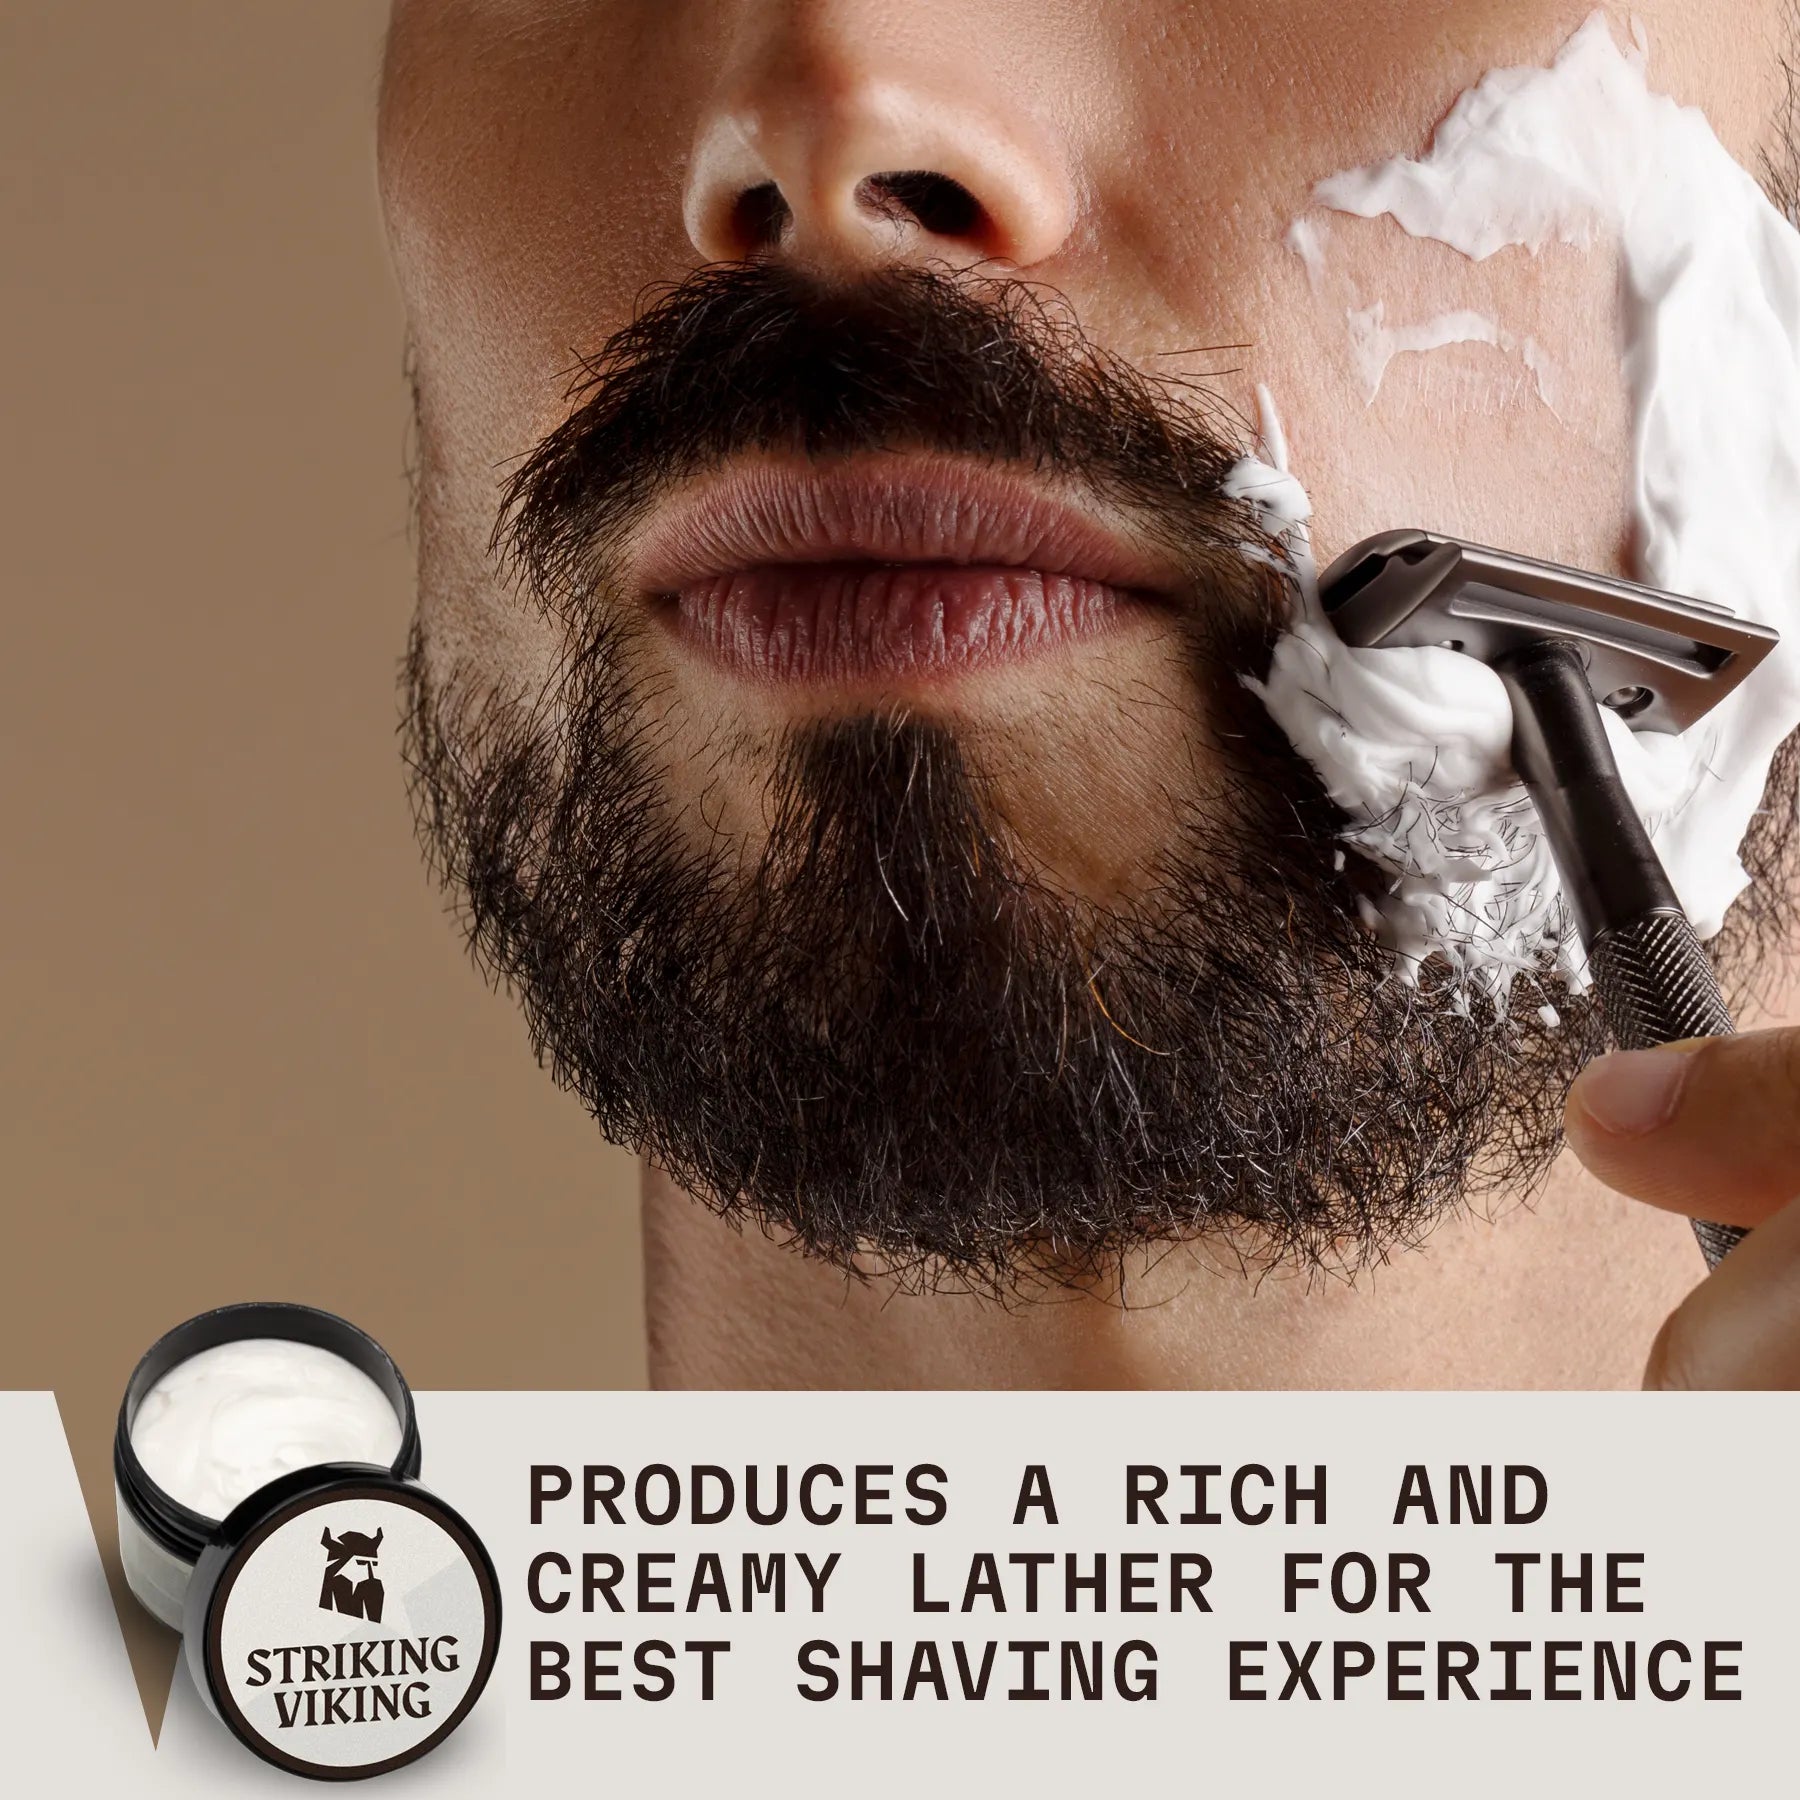 Shaving Cream for Men (Unscented)